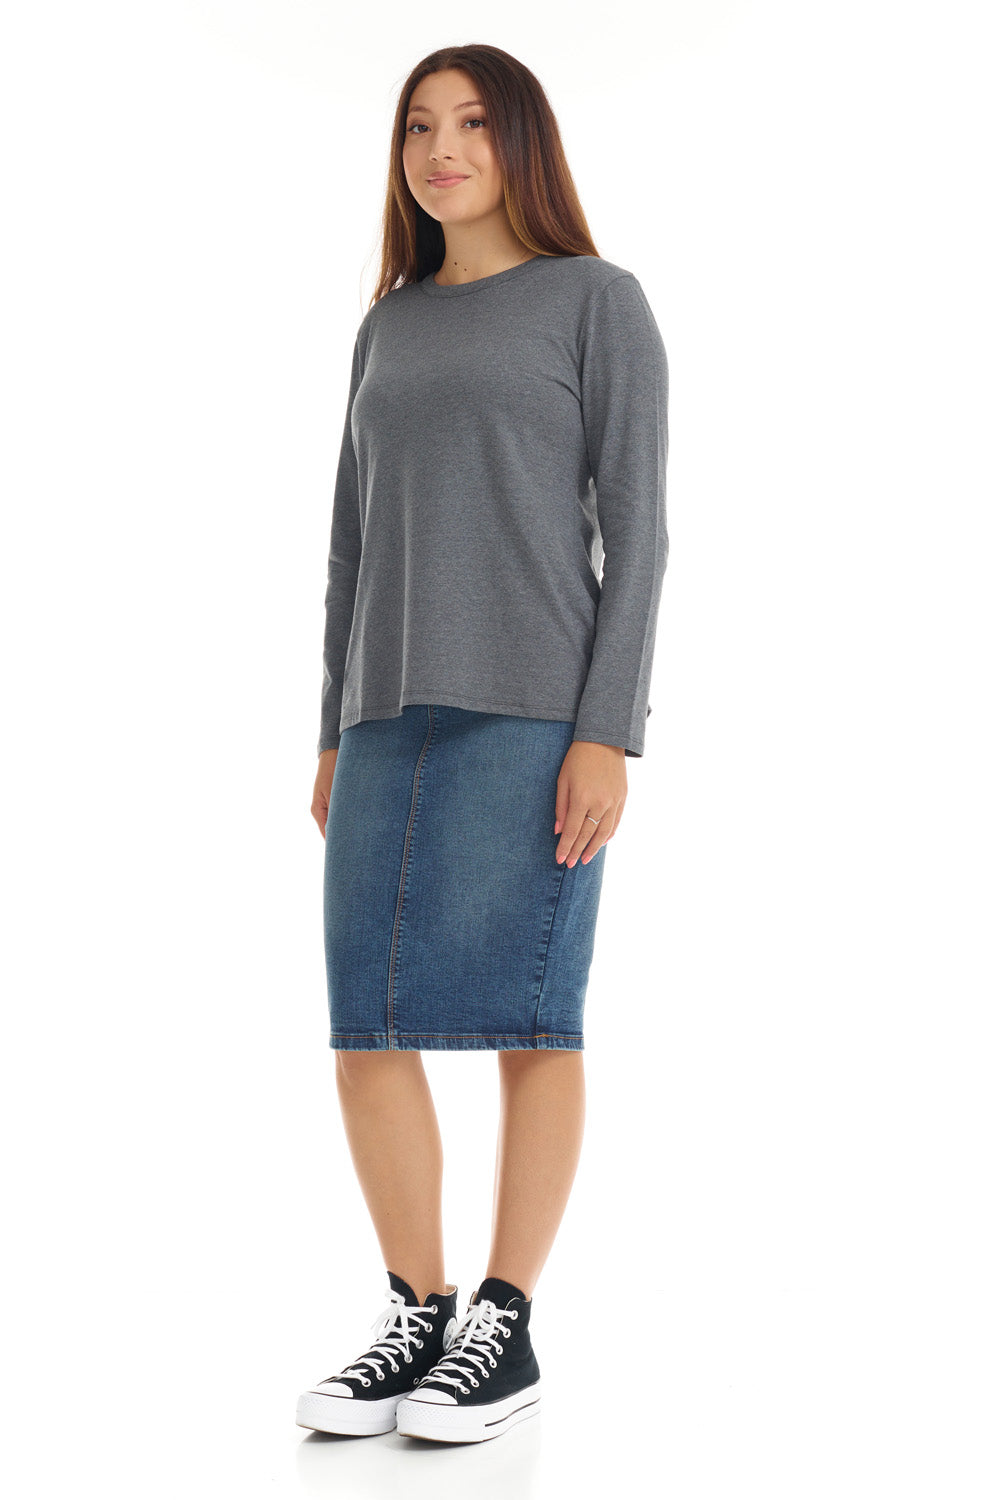 Charcoal Grey Long Sleeve Cotton T-shirt Top for Women